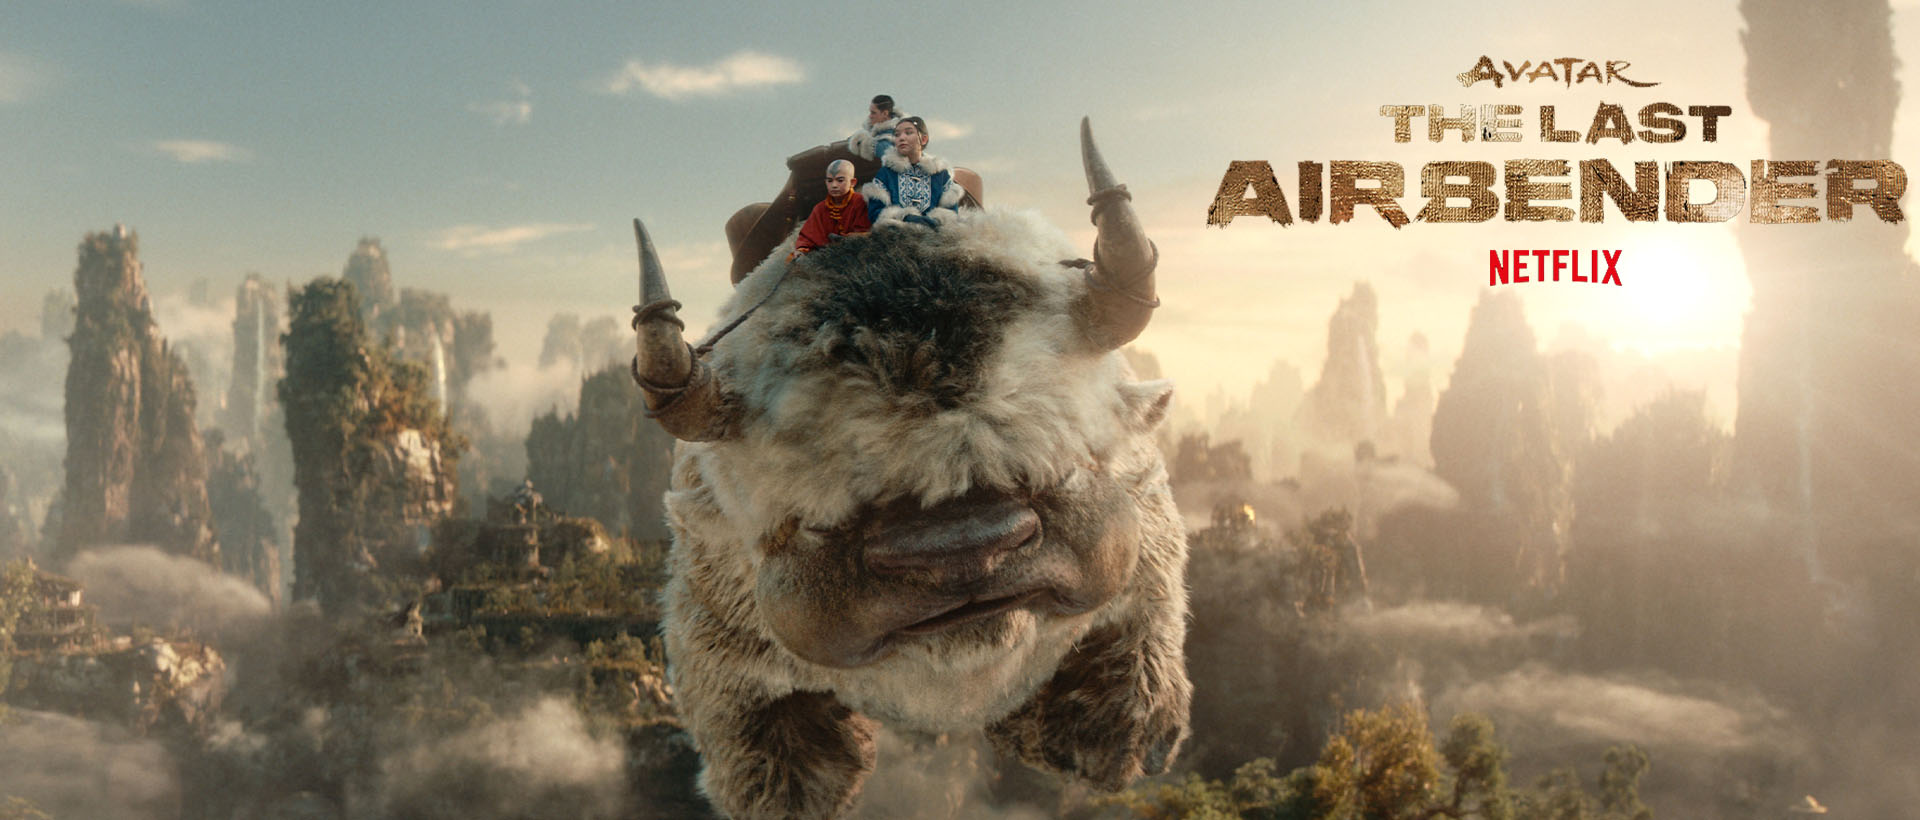 Geeked Week 23' Netflix Announces 'Avatar The Last Airbender' Will